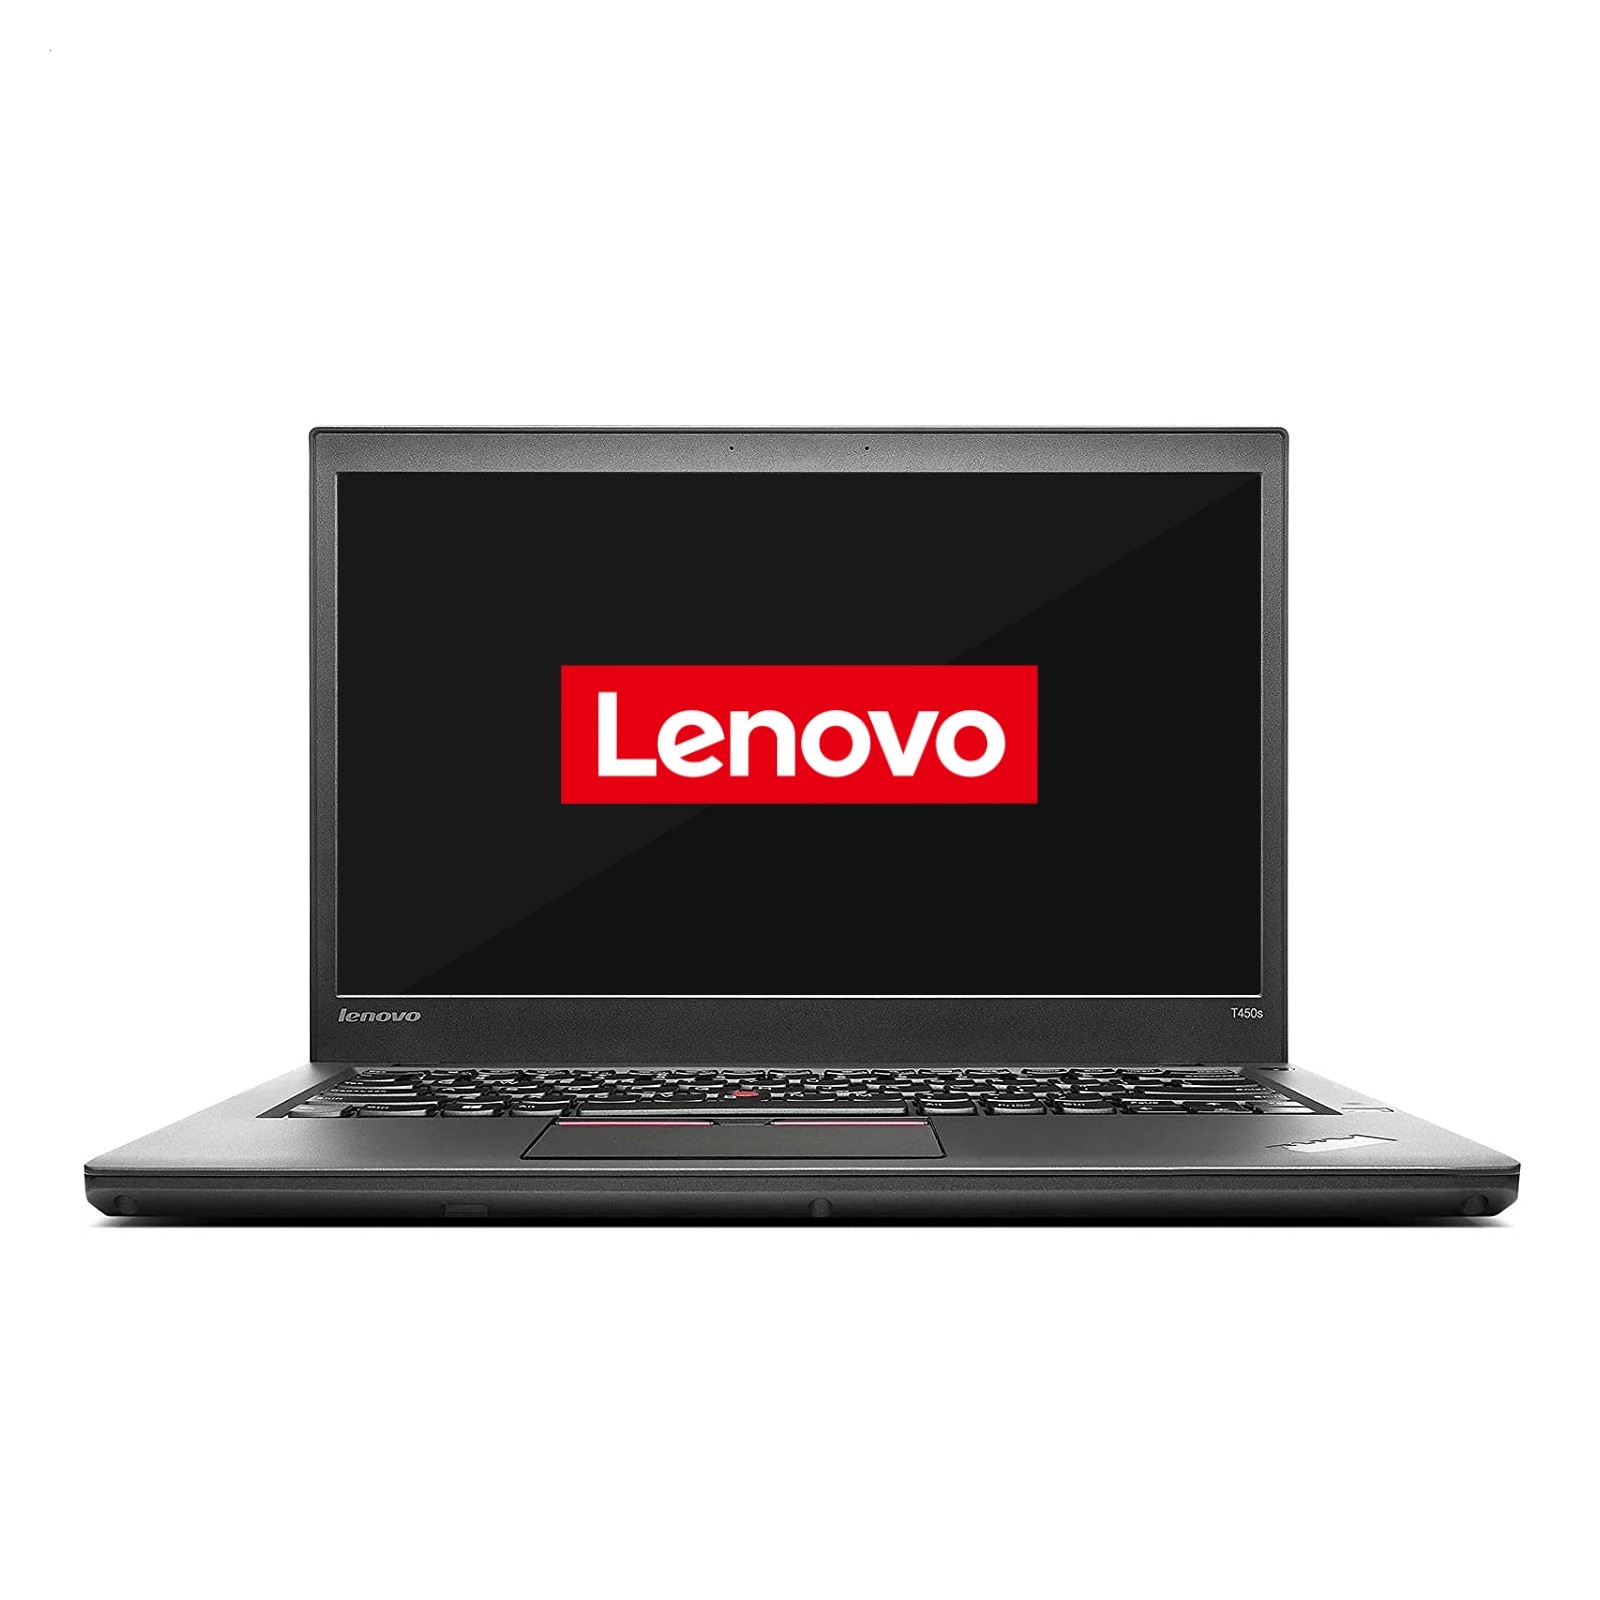 Lenovo ThinkPad T450s 14 Inch Laptop Front